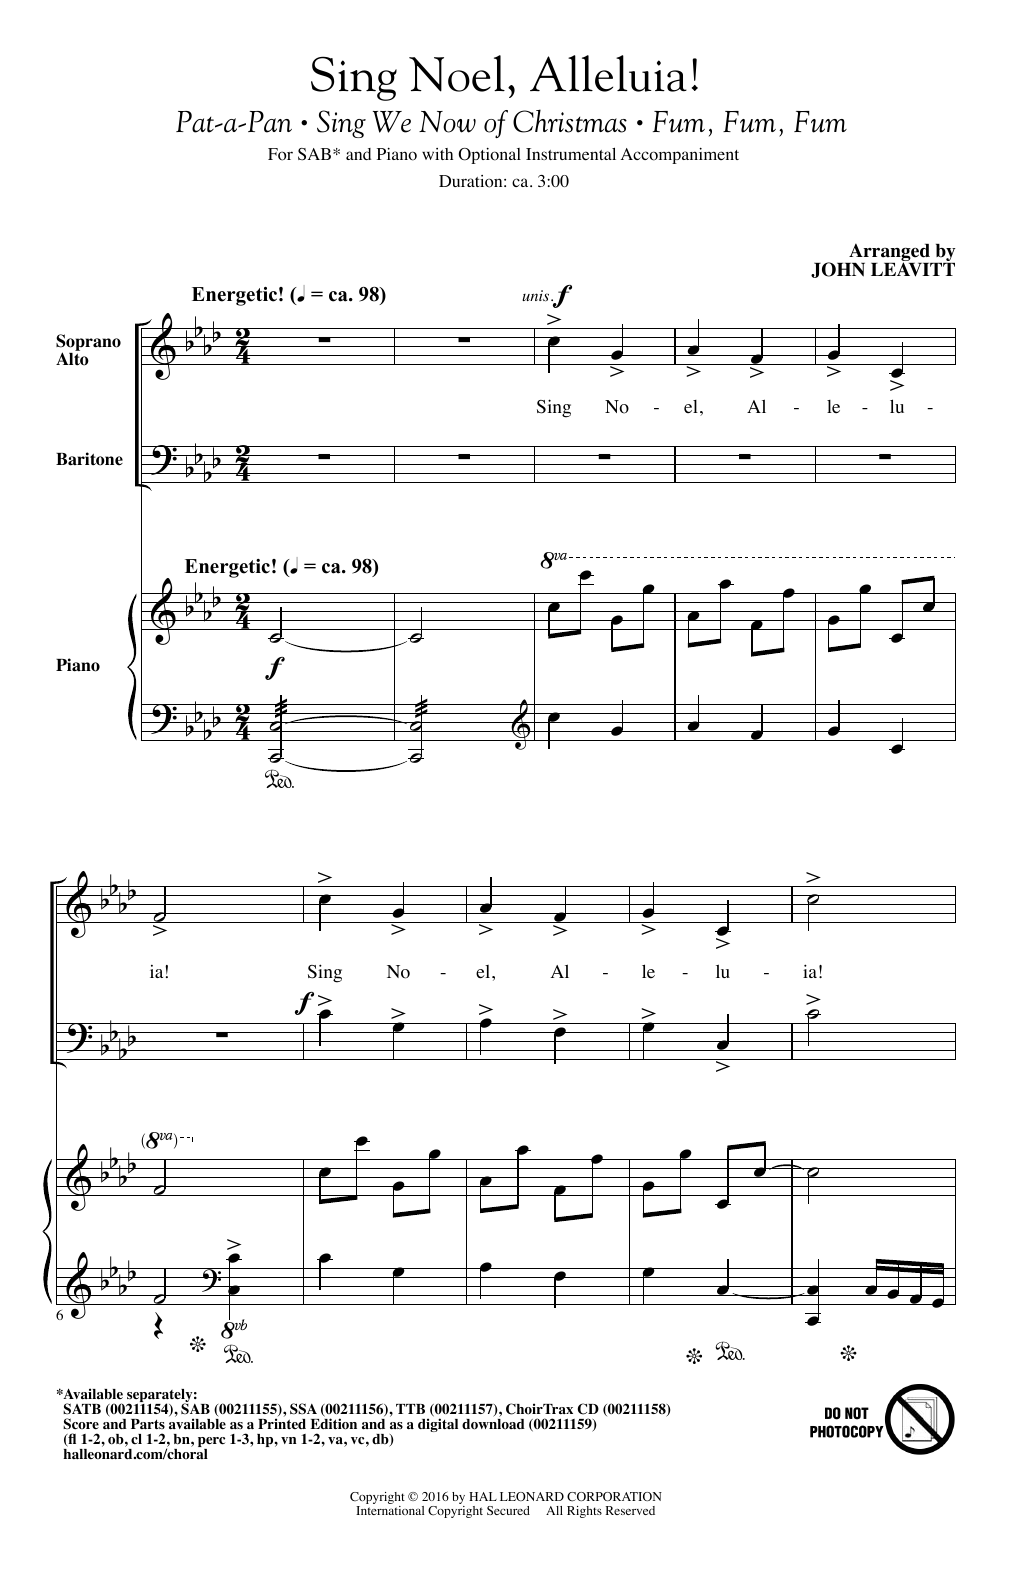 Download John Leavitt Sing Noel, Alleluia! Sheet Music and learn how to play TTBB PDF digital score in minutes